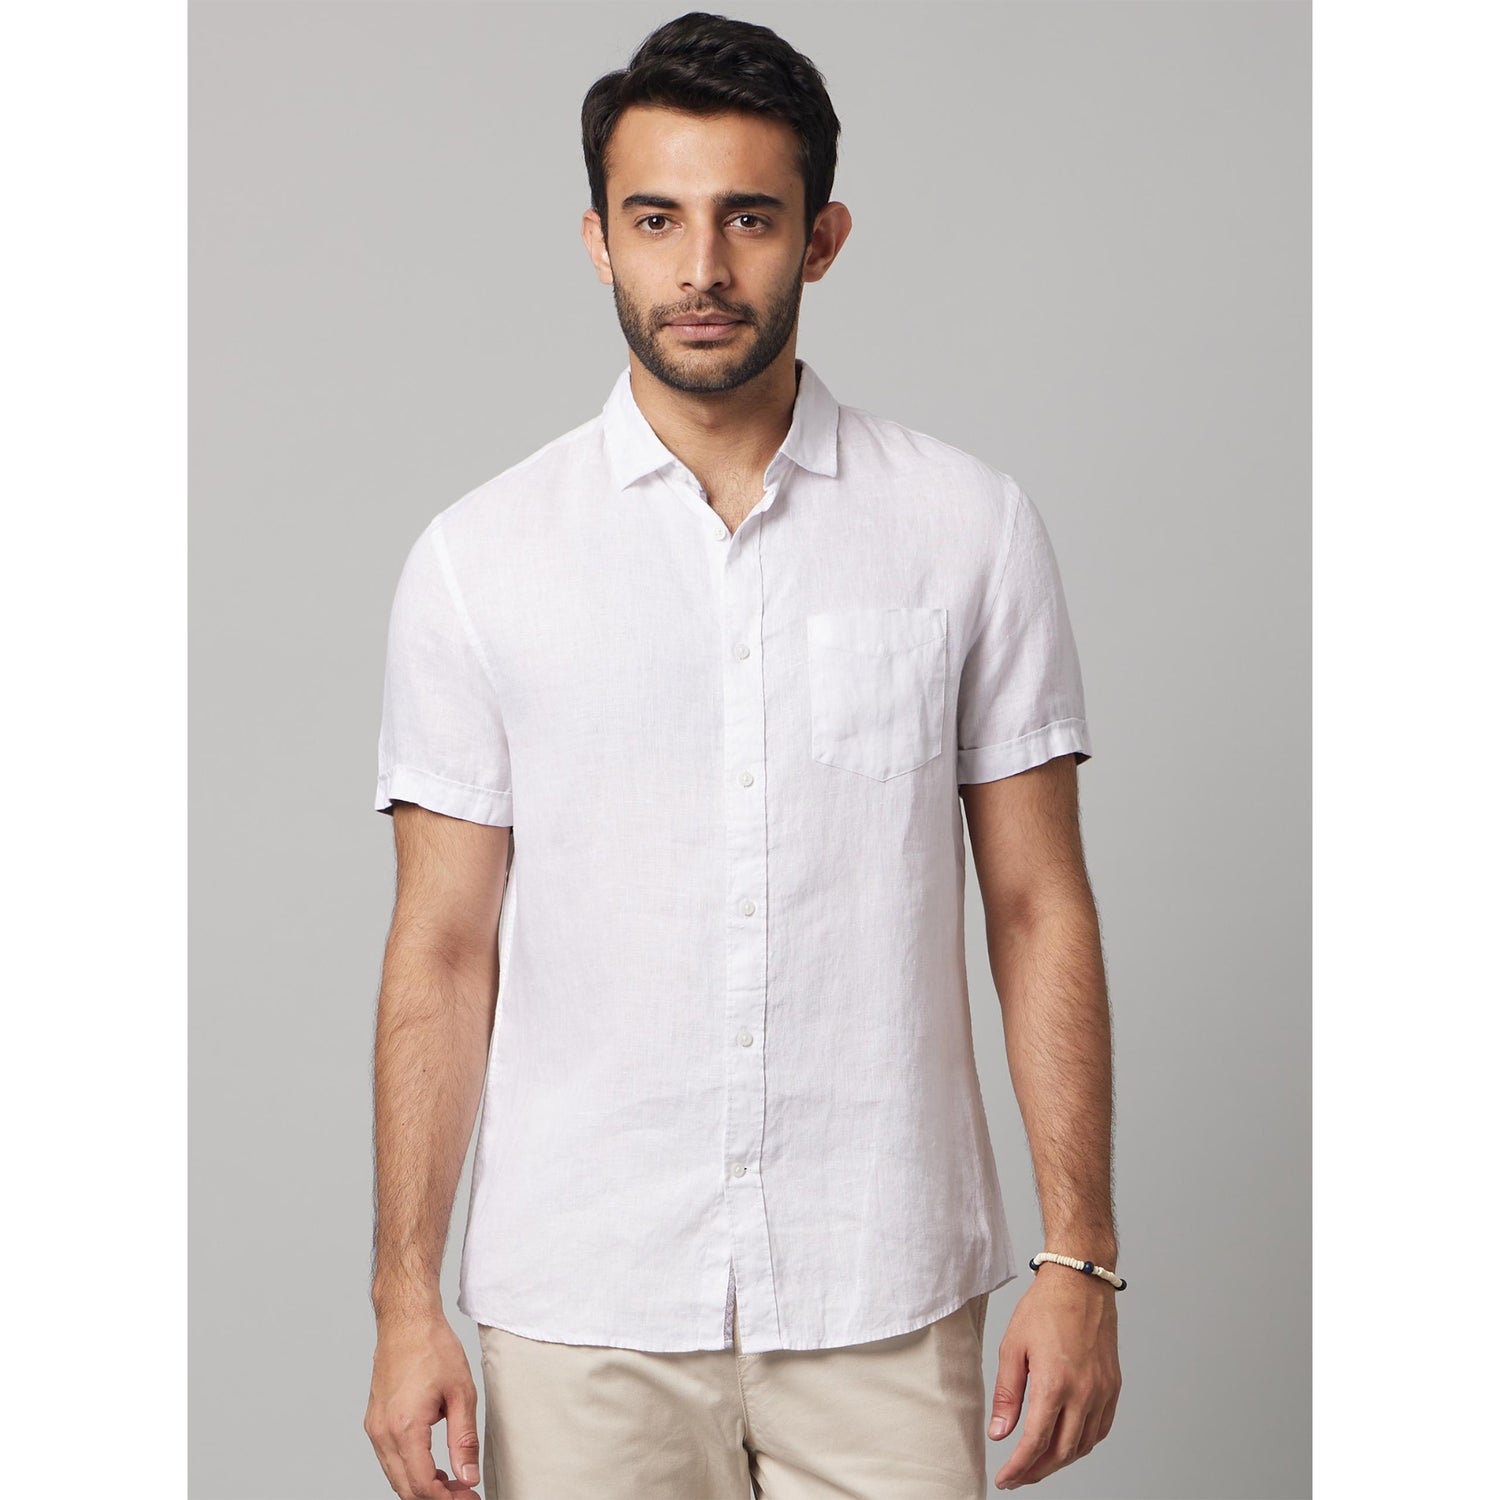 White Classic Short Sleeves Linen Casual Shirt (DACARAIN)